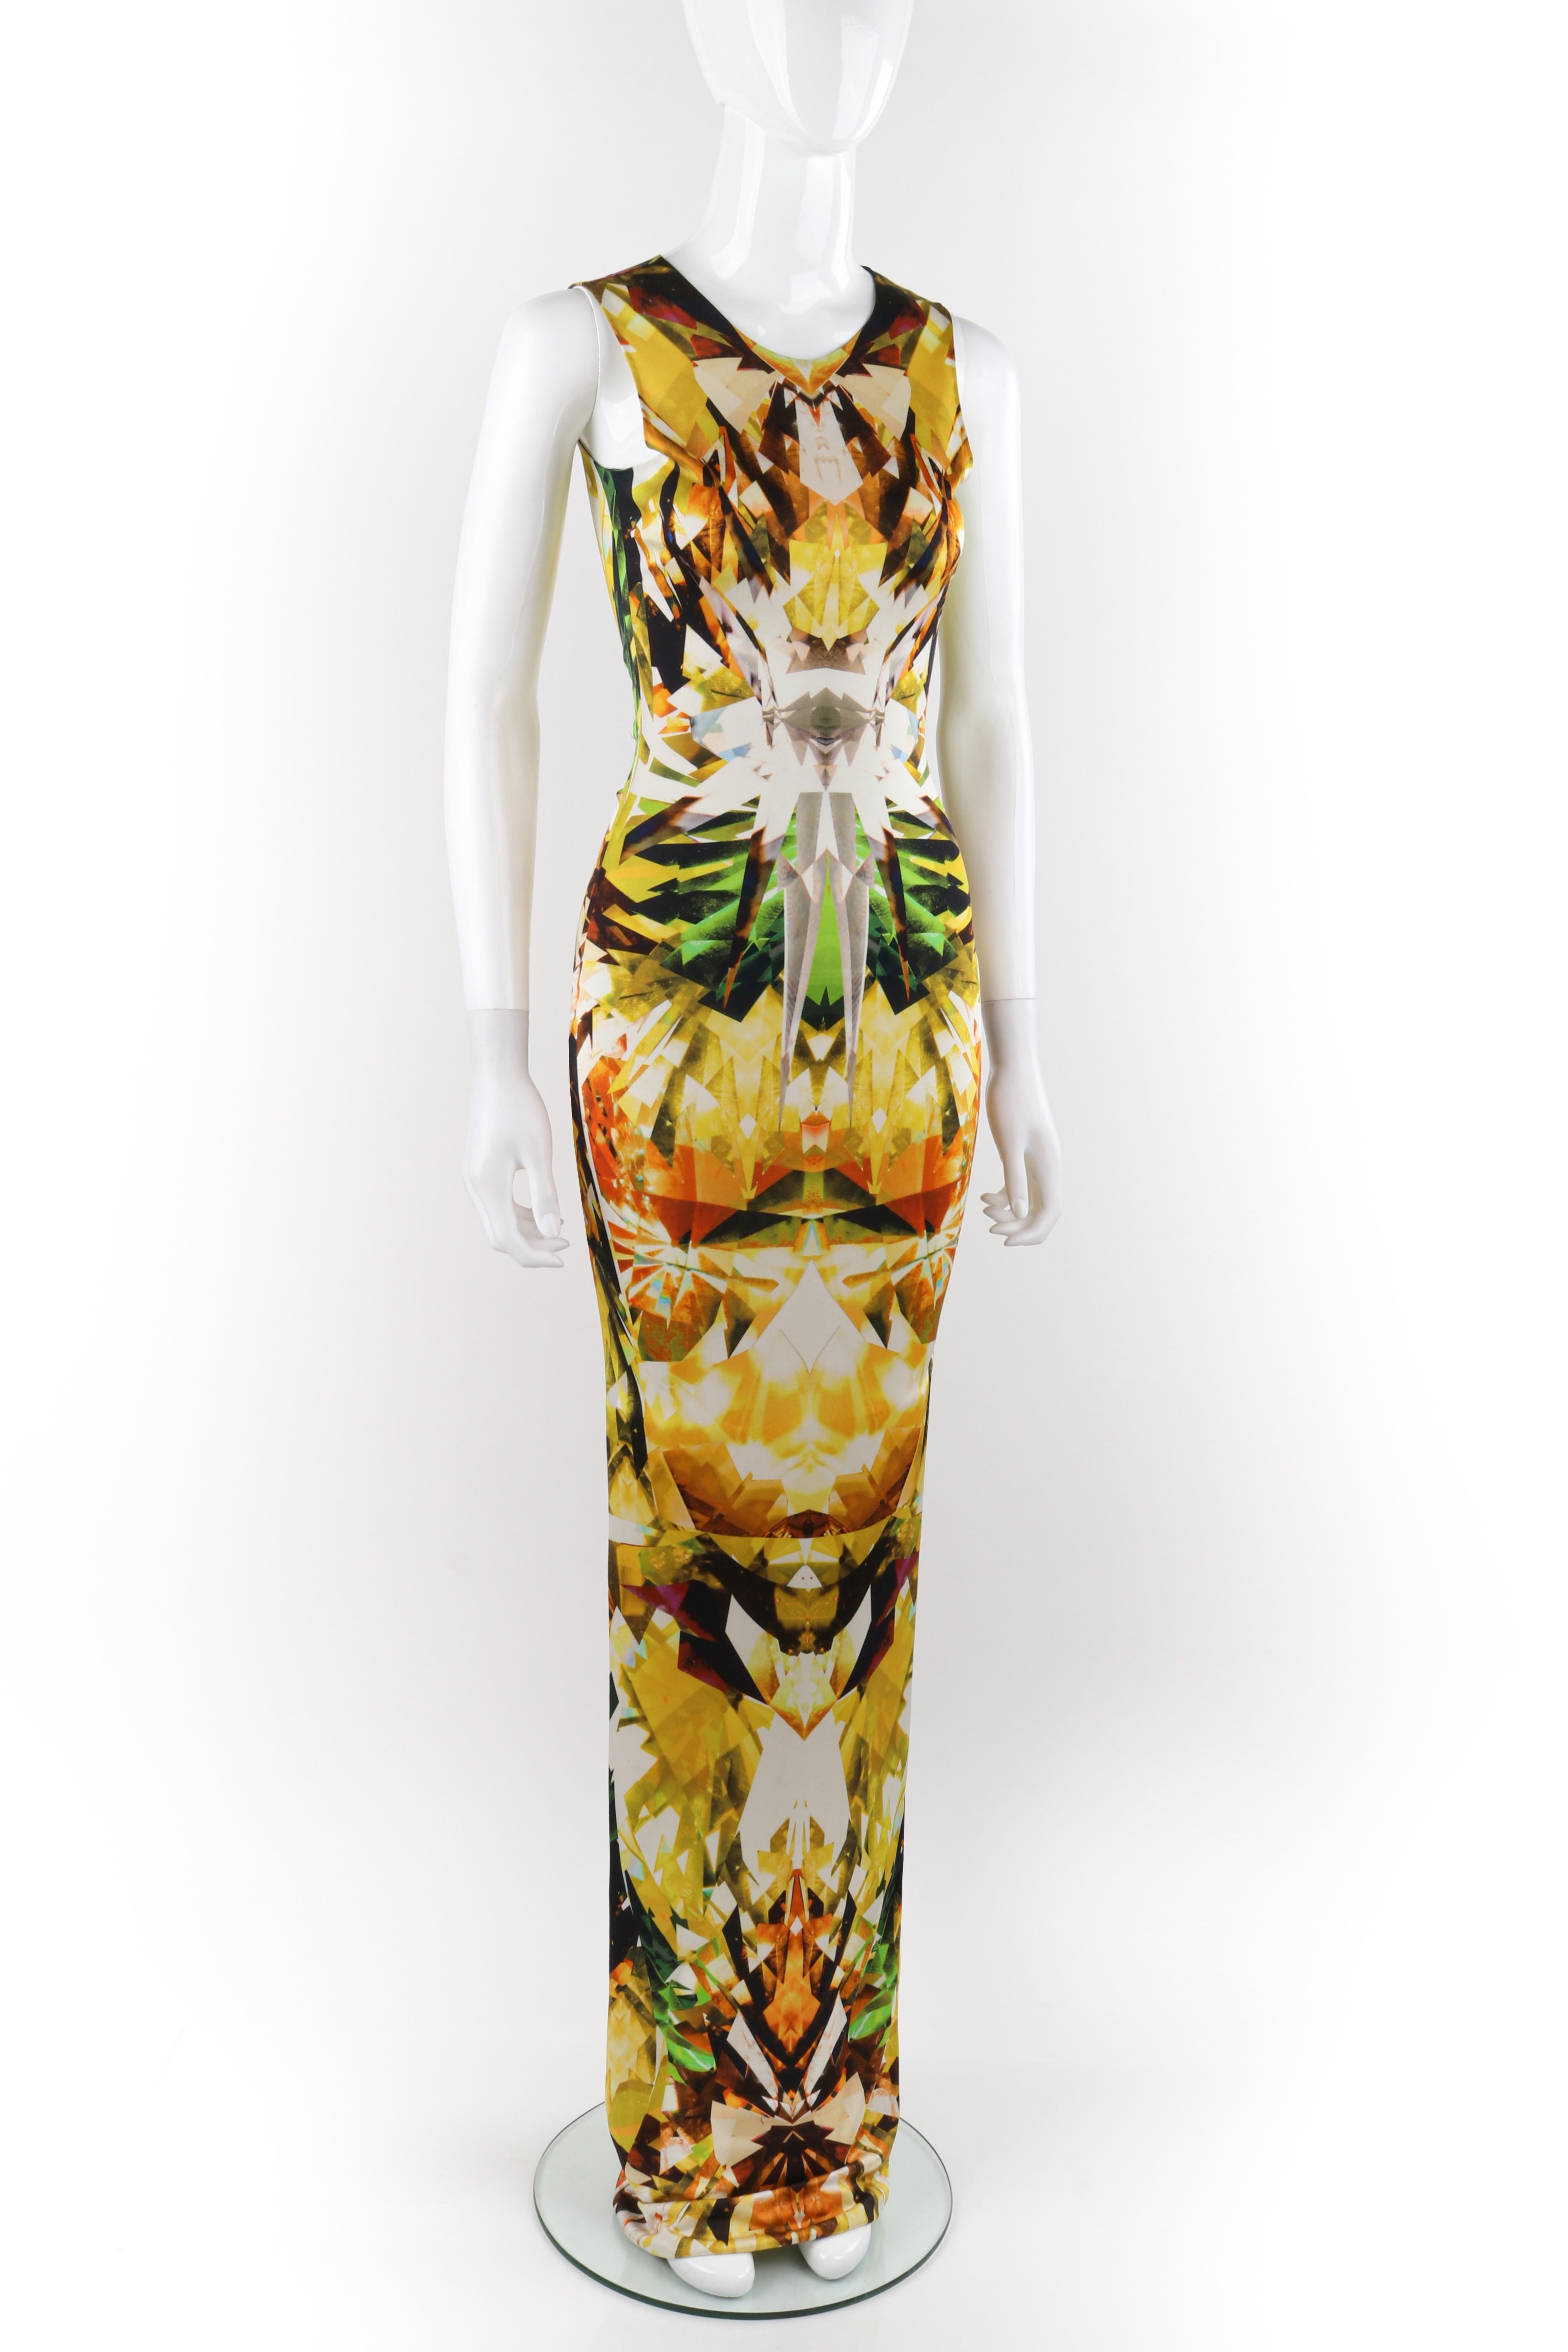 Beige ALEXANDER McQUEEN S/S 2009 “Natural Distinction” Crystal Kaleidoscope Maxi Dress For Sale